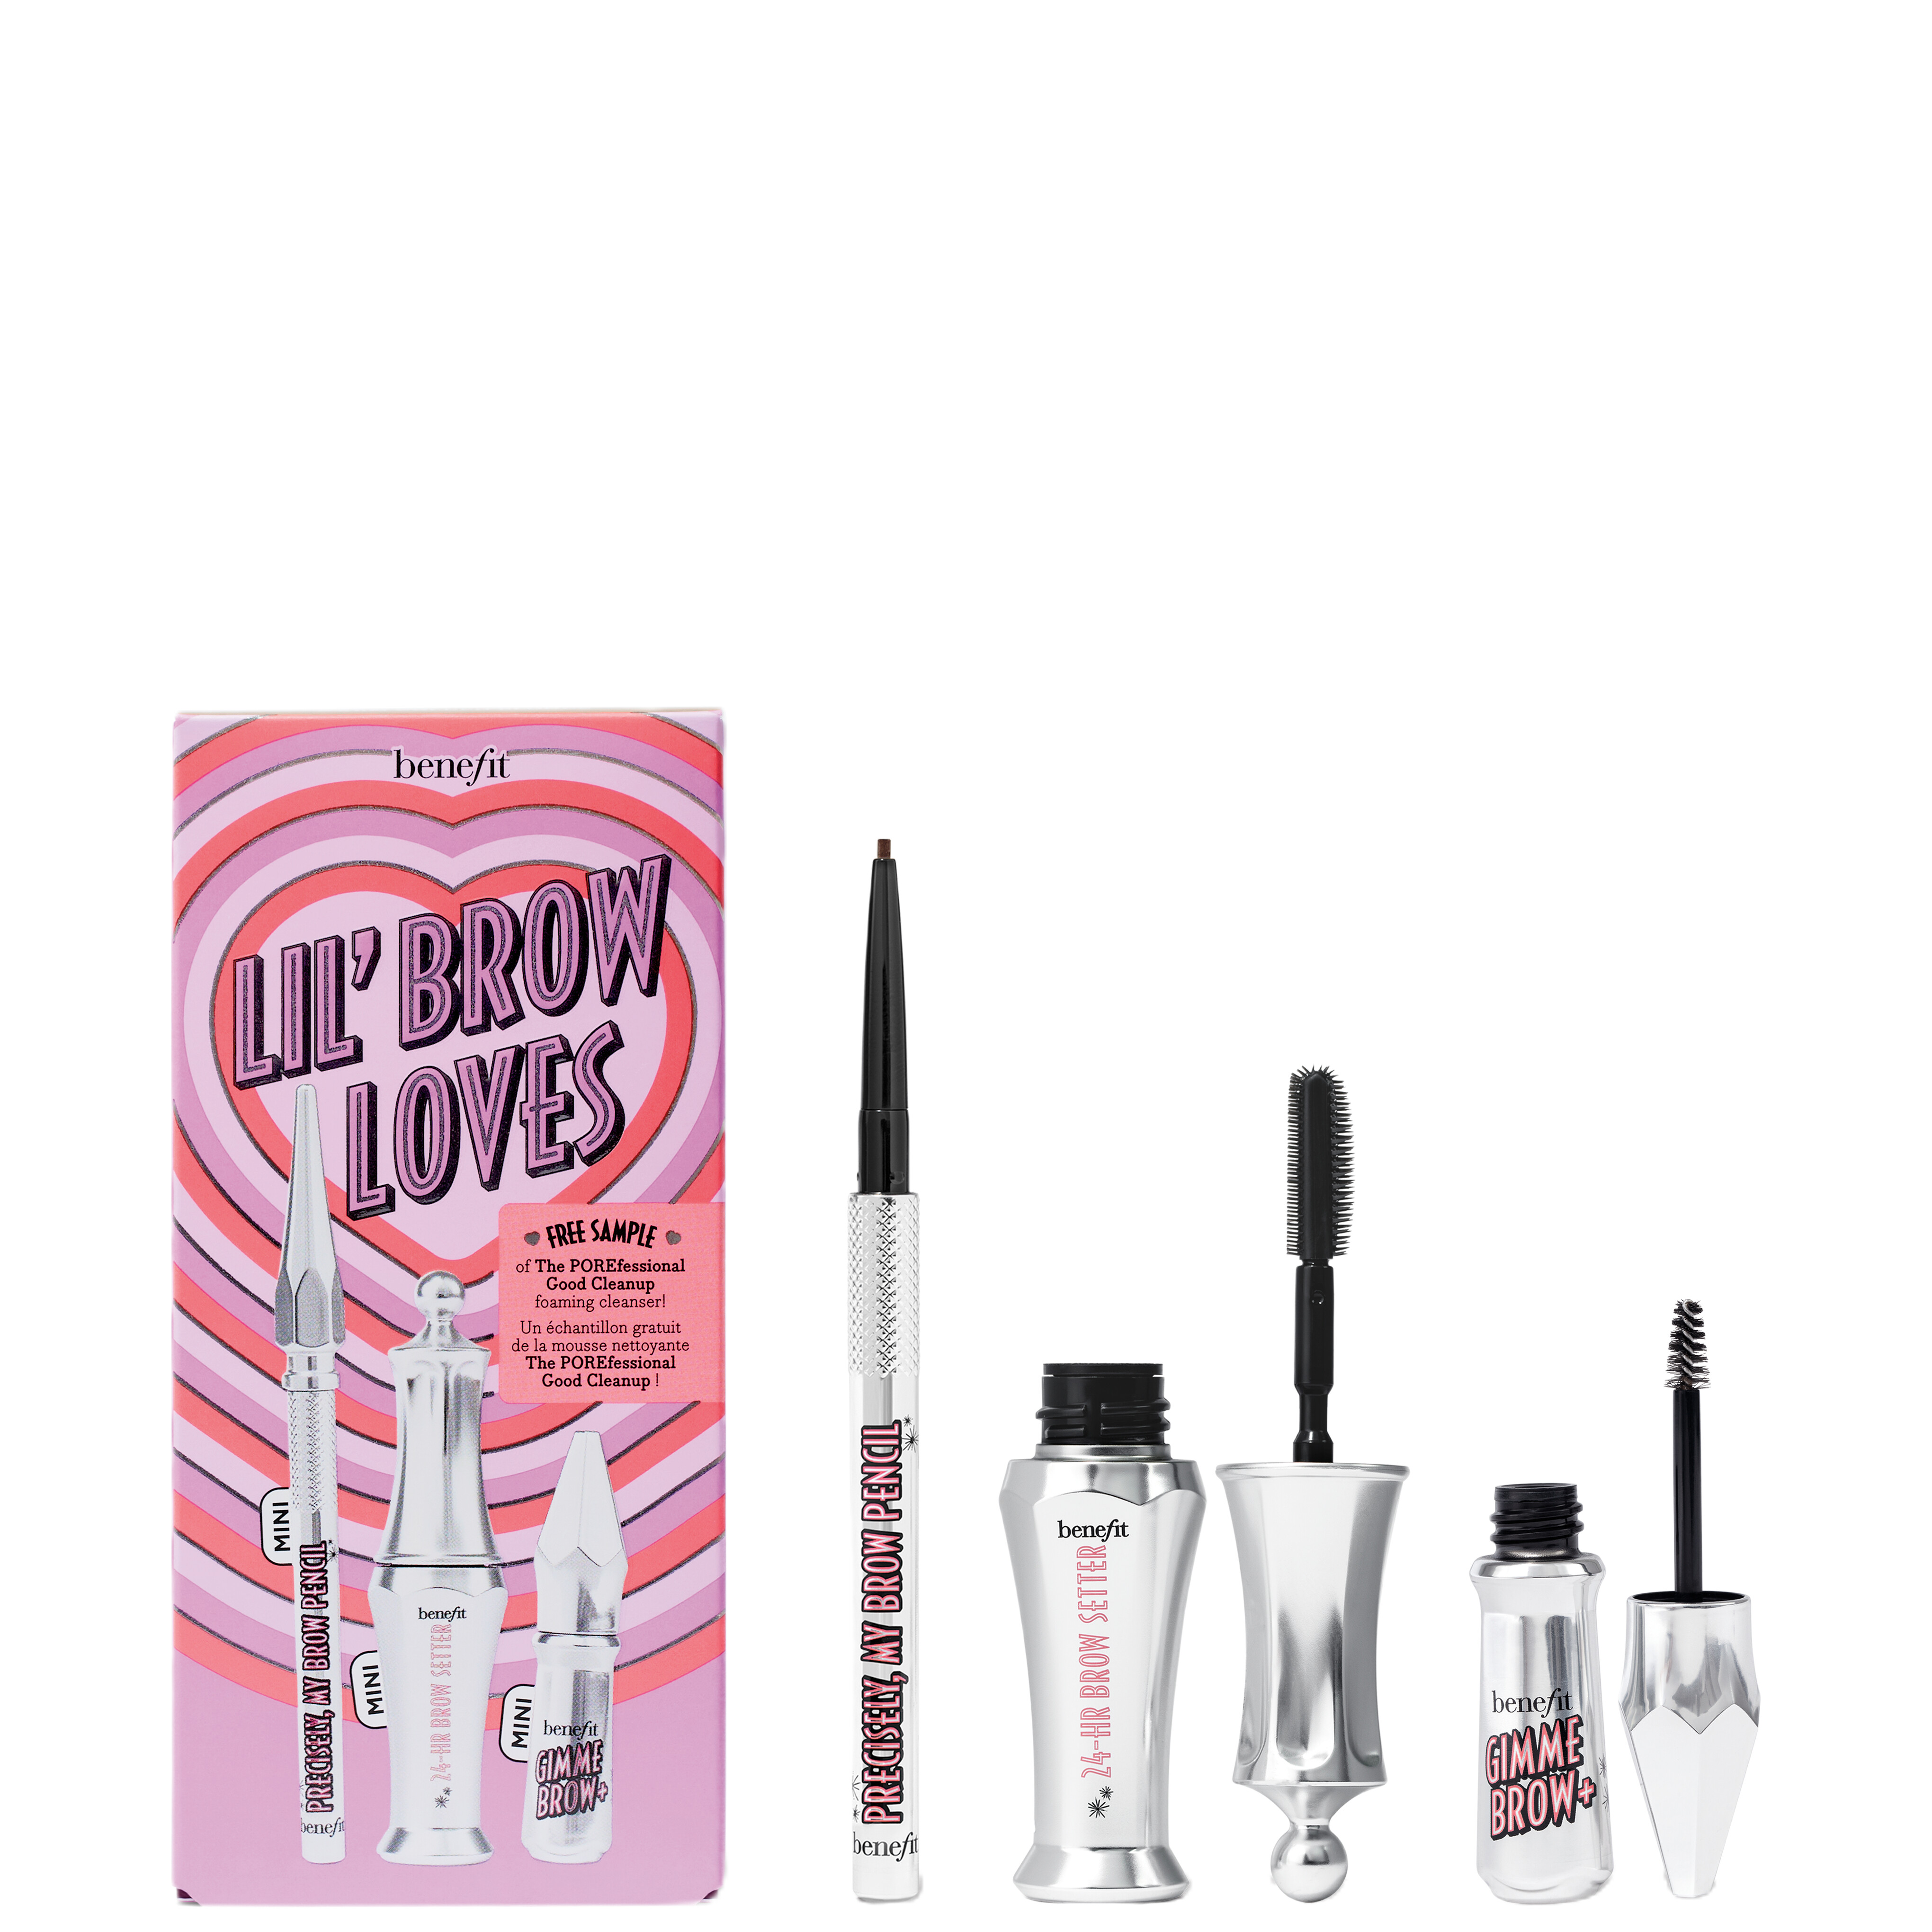 Benefit Lil' Brow Loves Mini Brow Gift Set 5 - Black-Brown